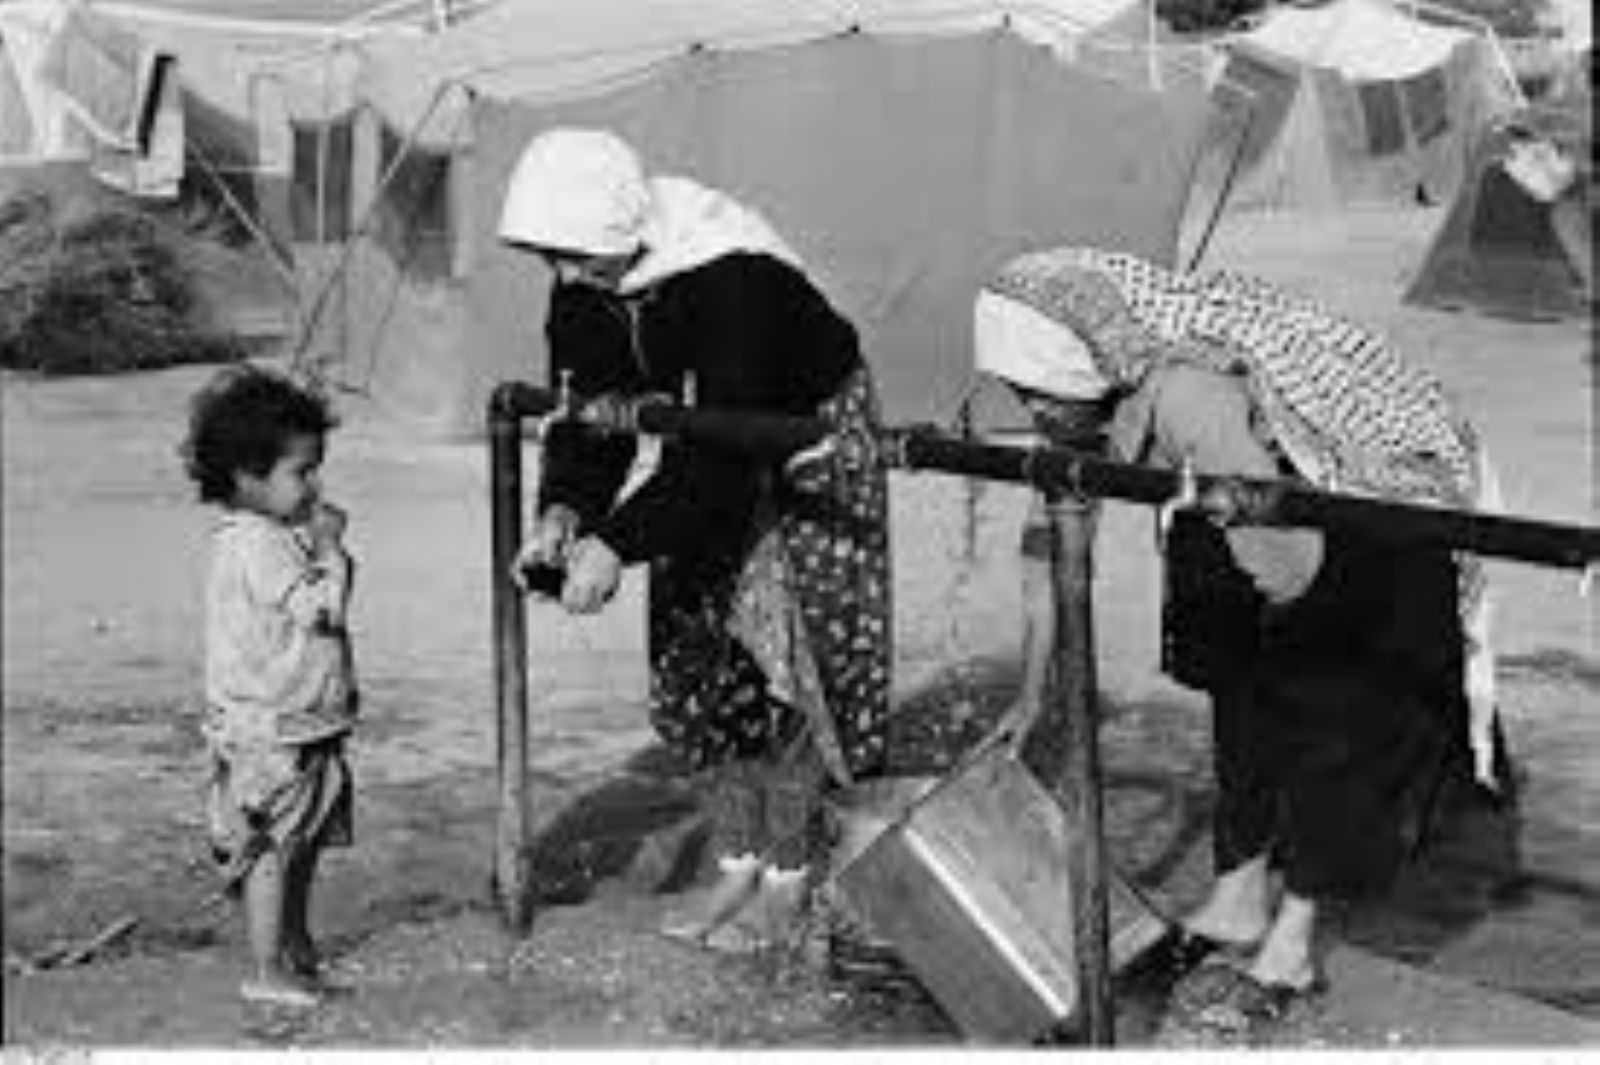 Israel displaced 67% of Palestinians in 1948